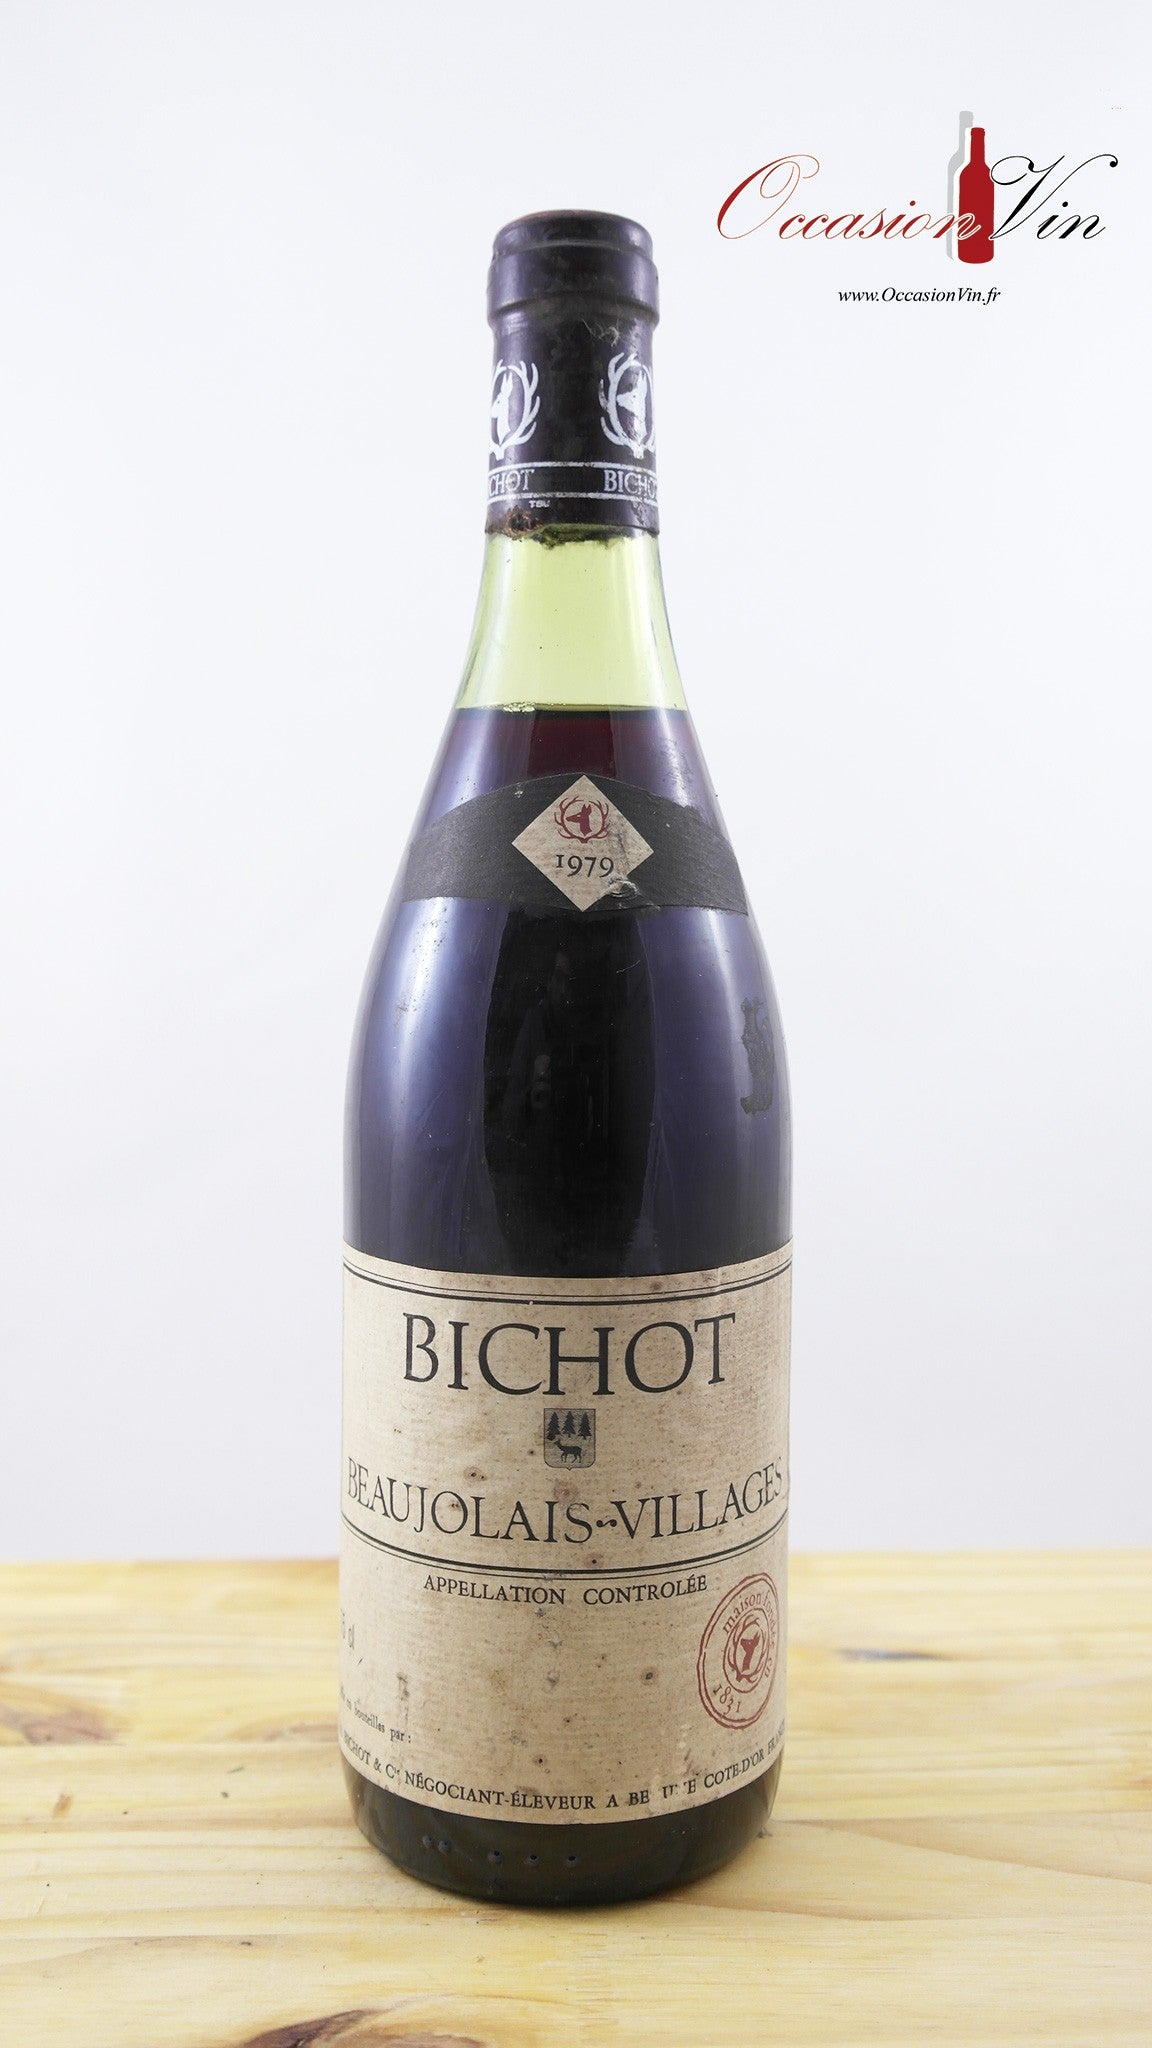 Bichot Beaujolais-Village Vin 1979